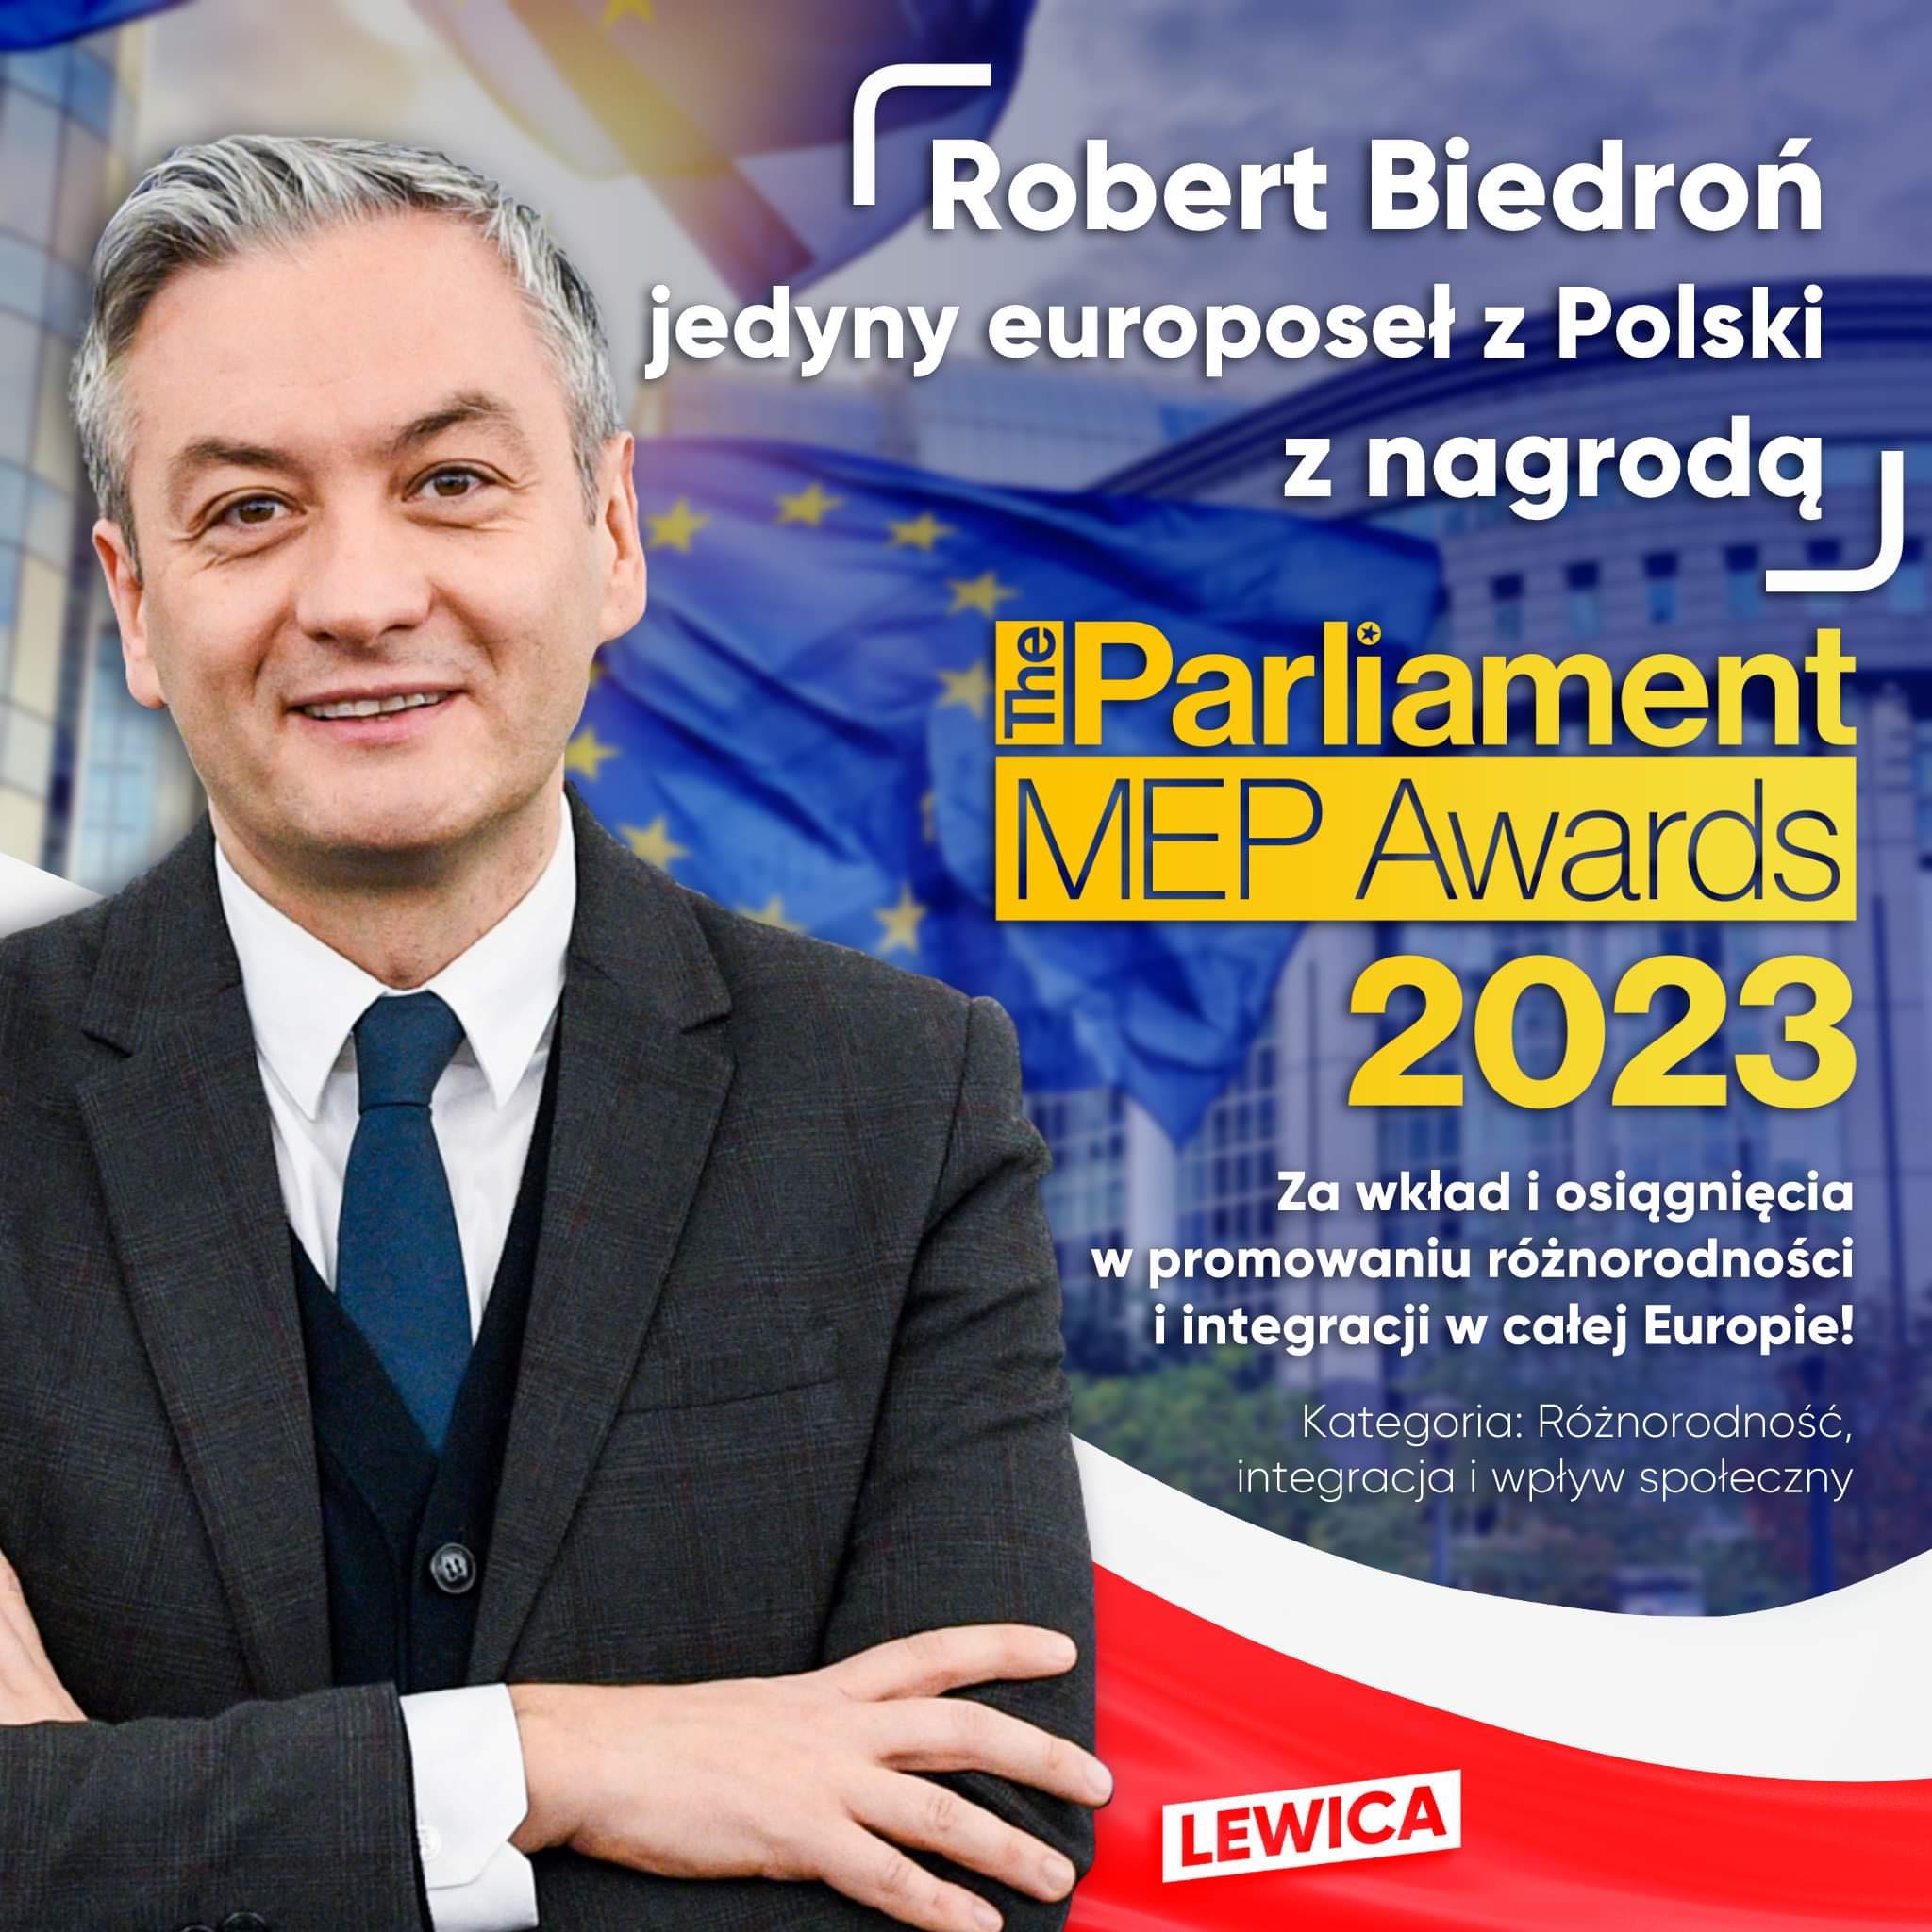 Biedron MEP 270623